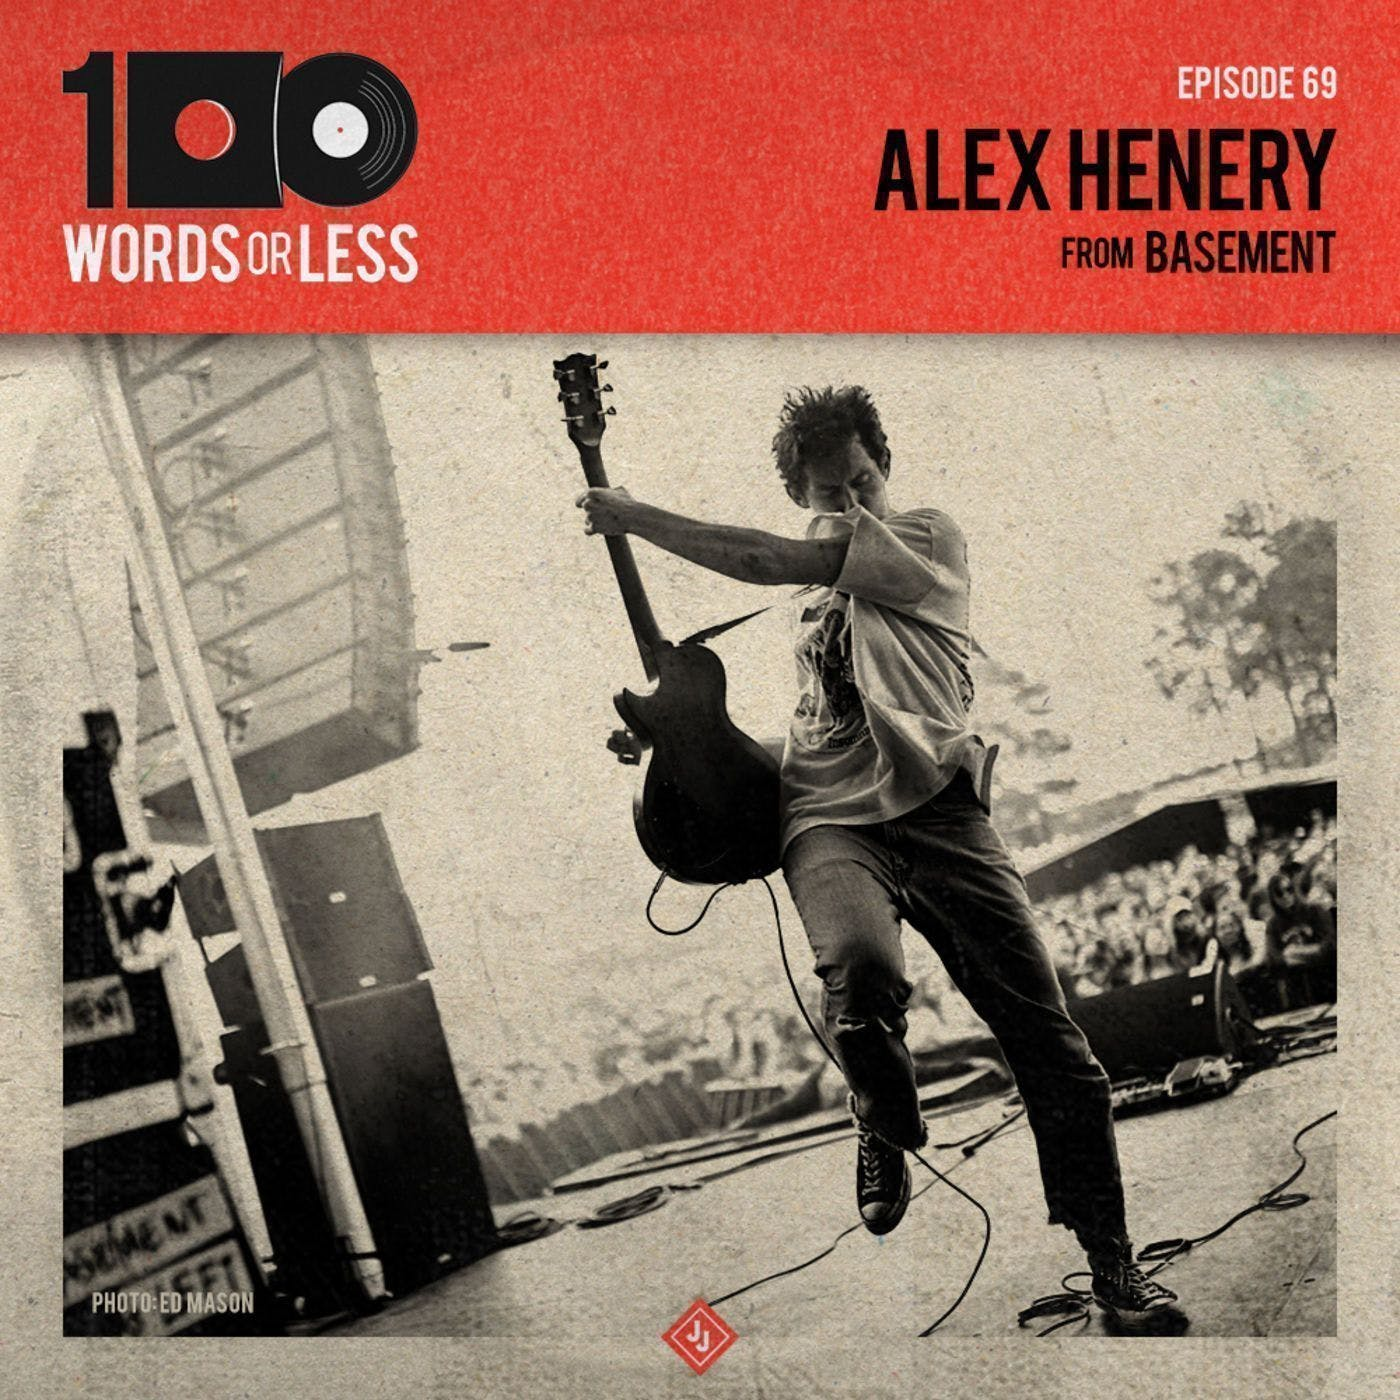 Alex Henery from Basement